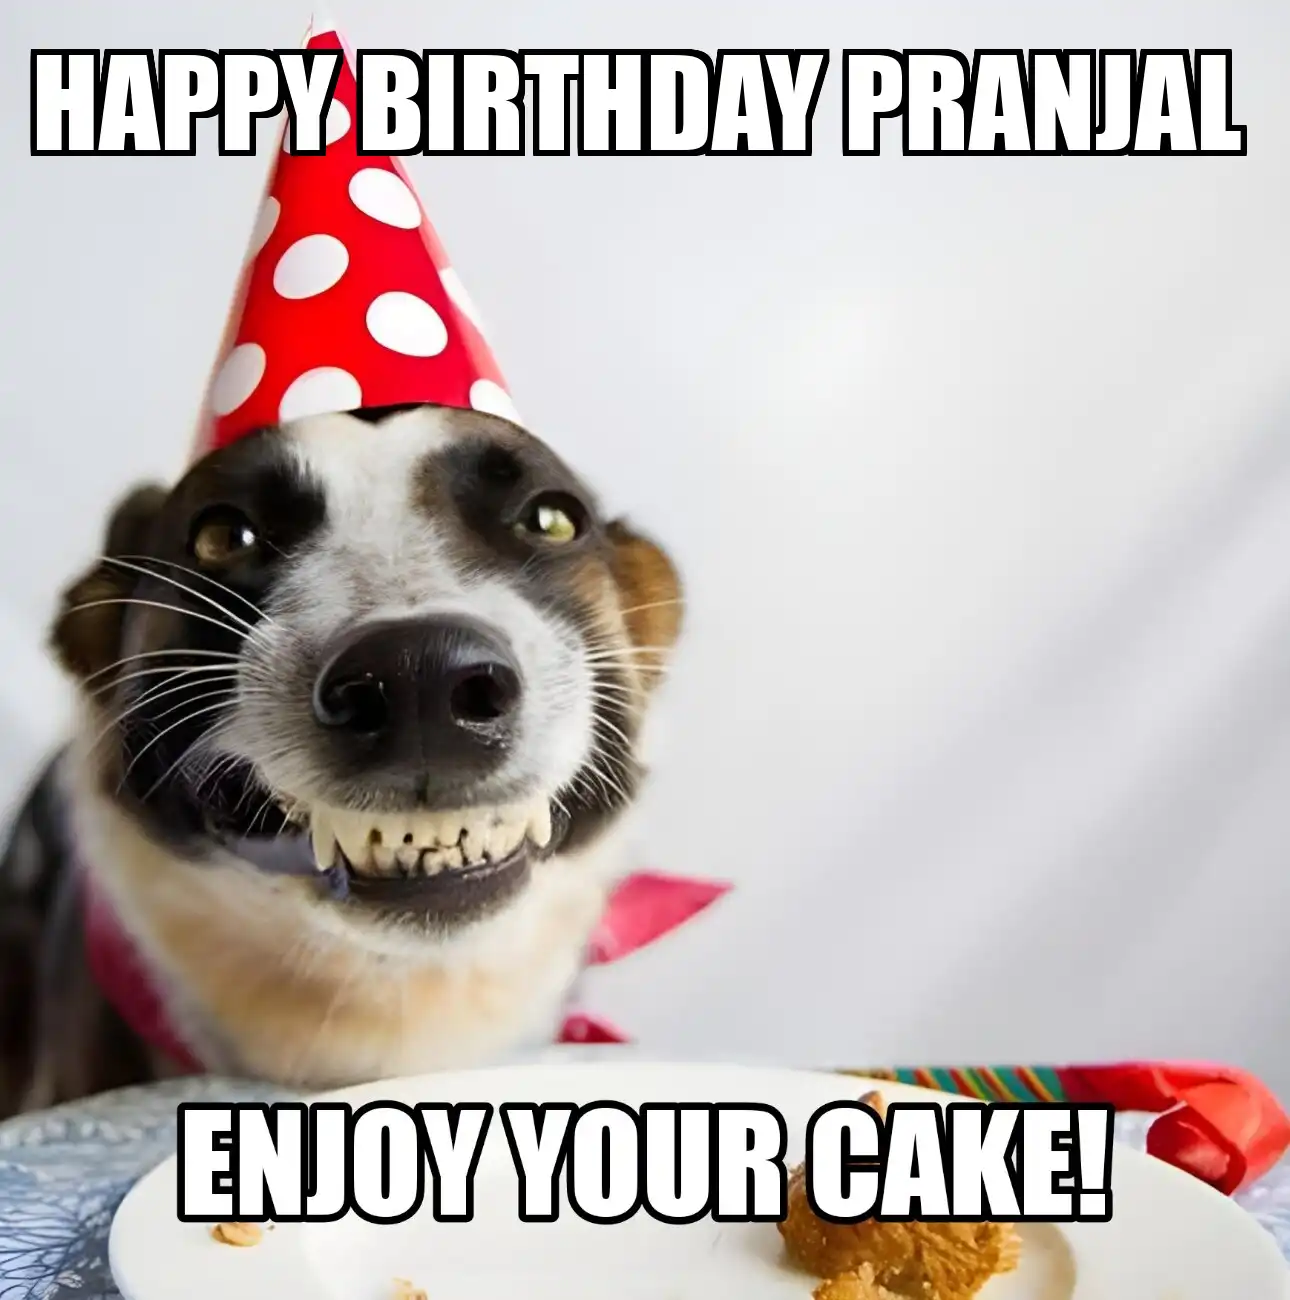 Happy Birthday Pranjal Enjoy Your Cake Dog Meme